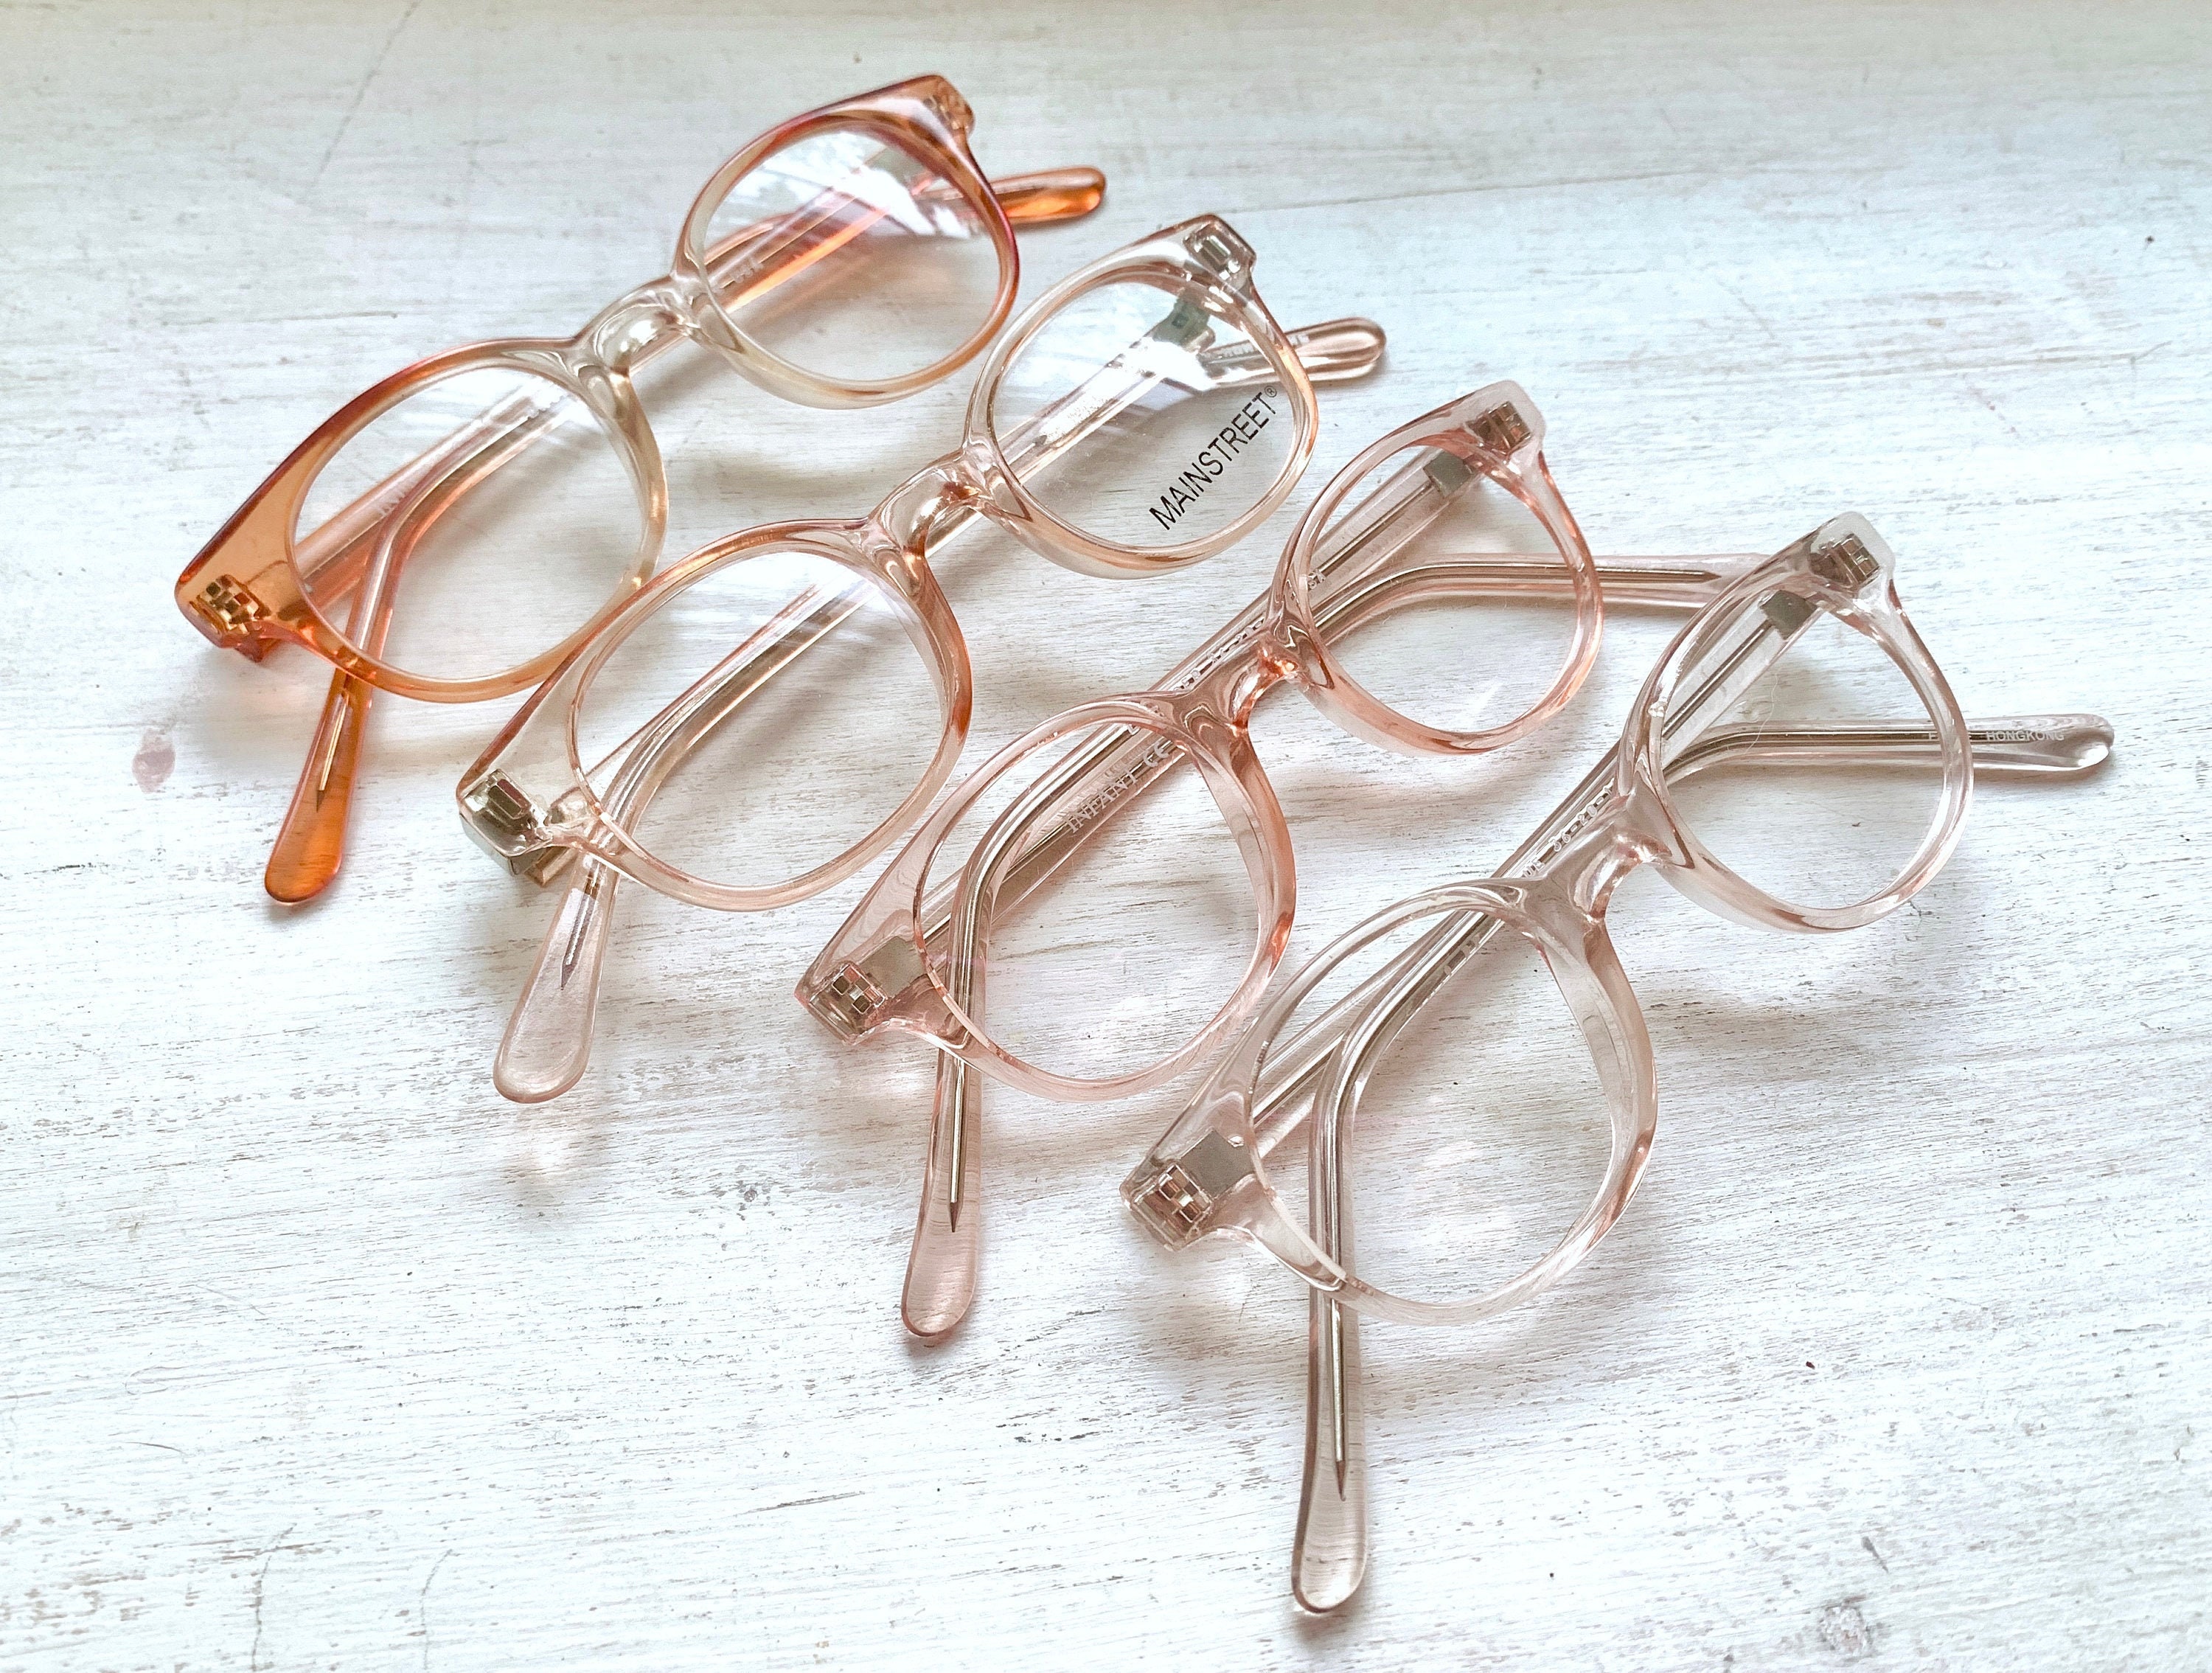 Vintage Frame Eyeglasses Small  Small Square Eyeglasses Frames